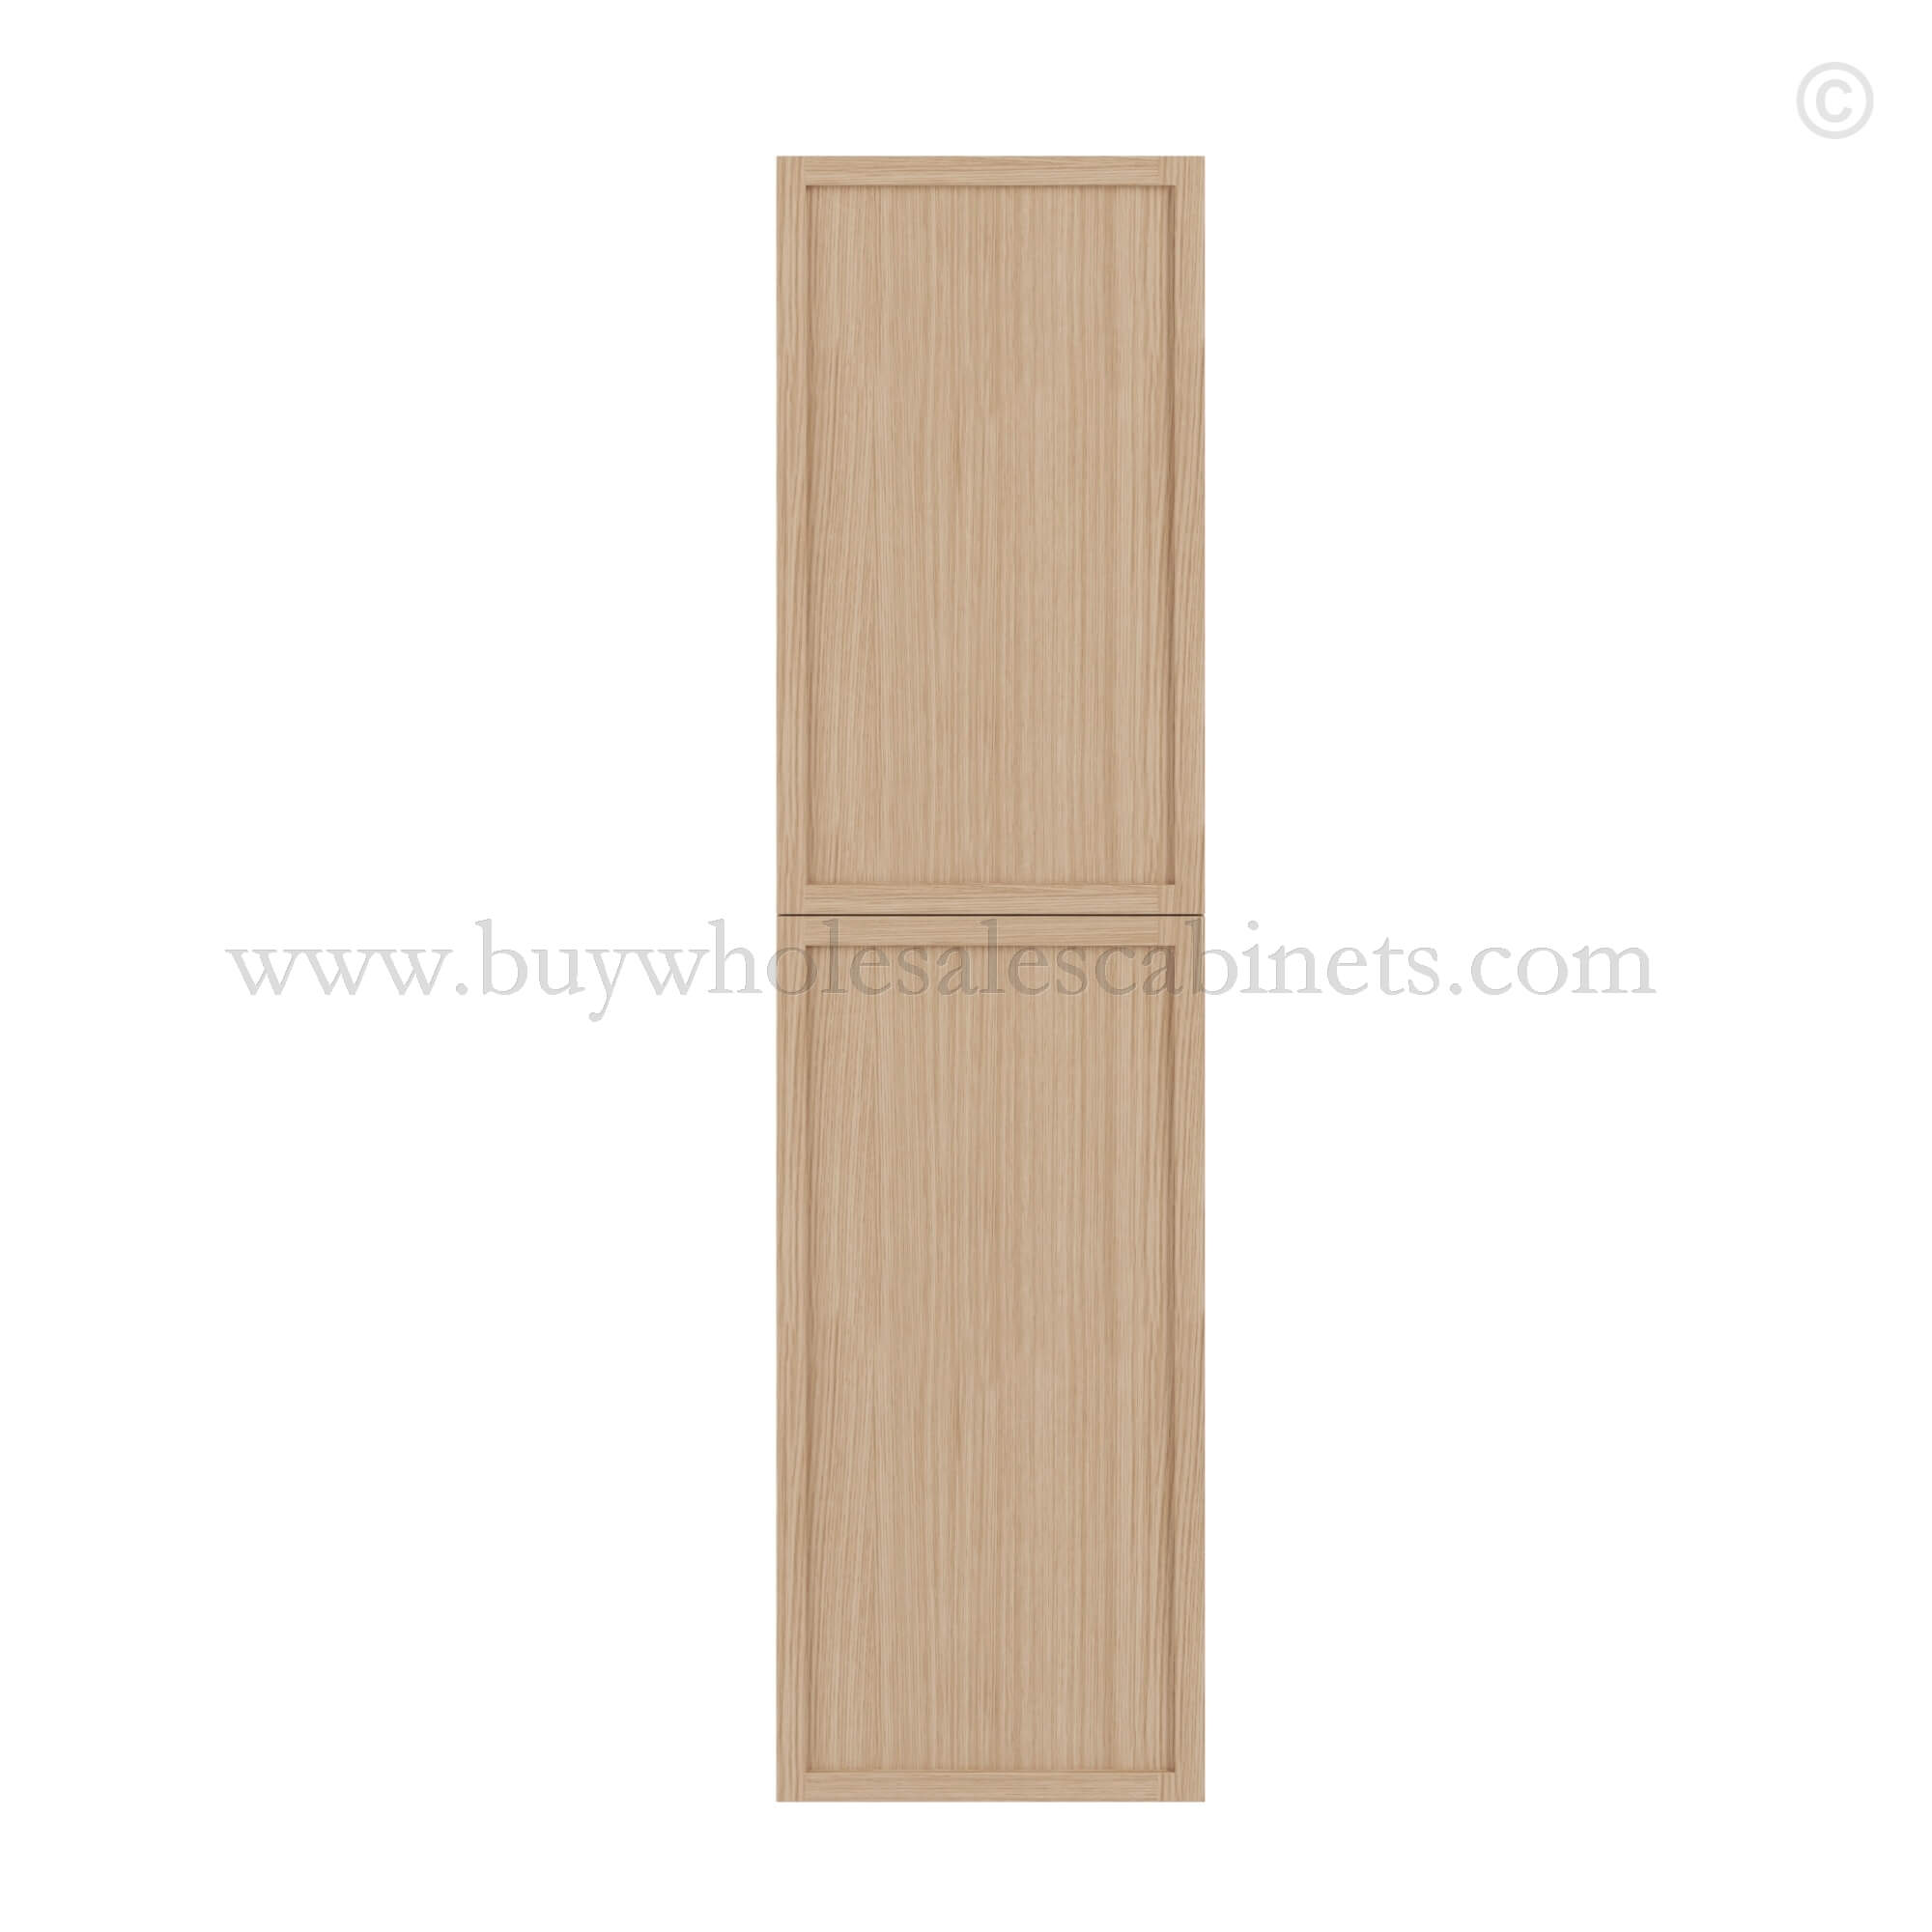 Slim Oak Shaker Tall Decorative Door Panel, rta cabinets, wholesale cabinets